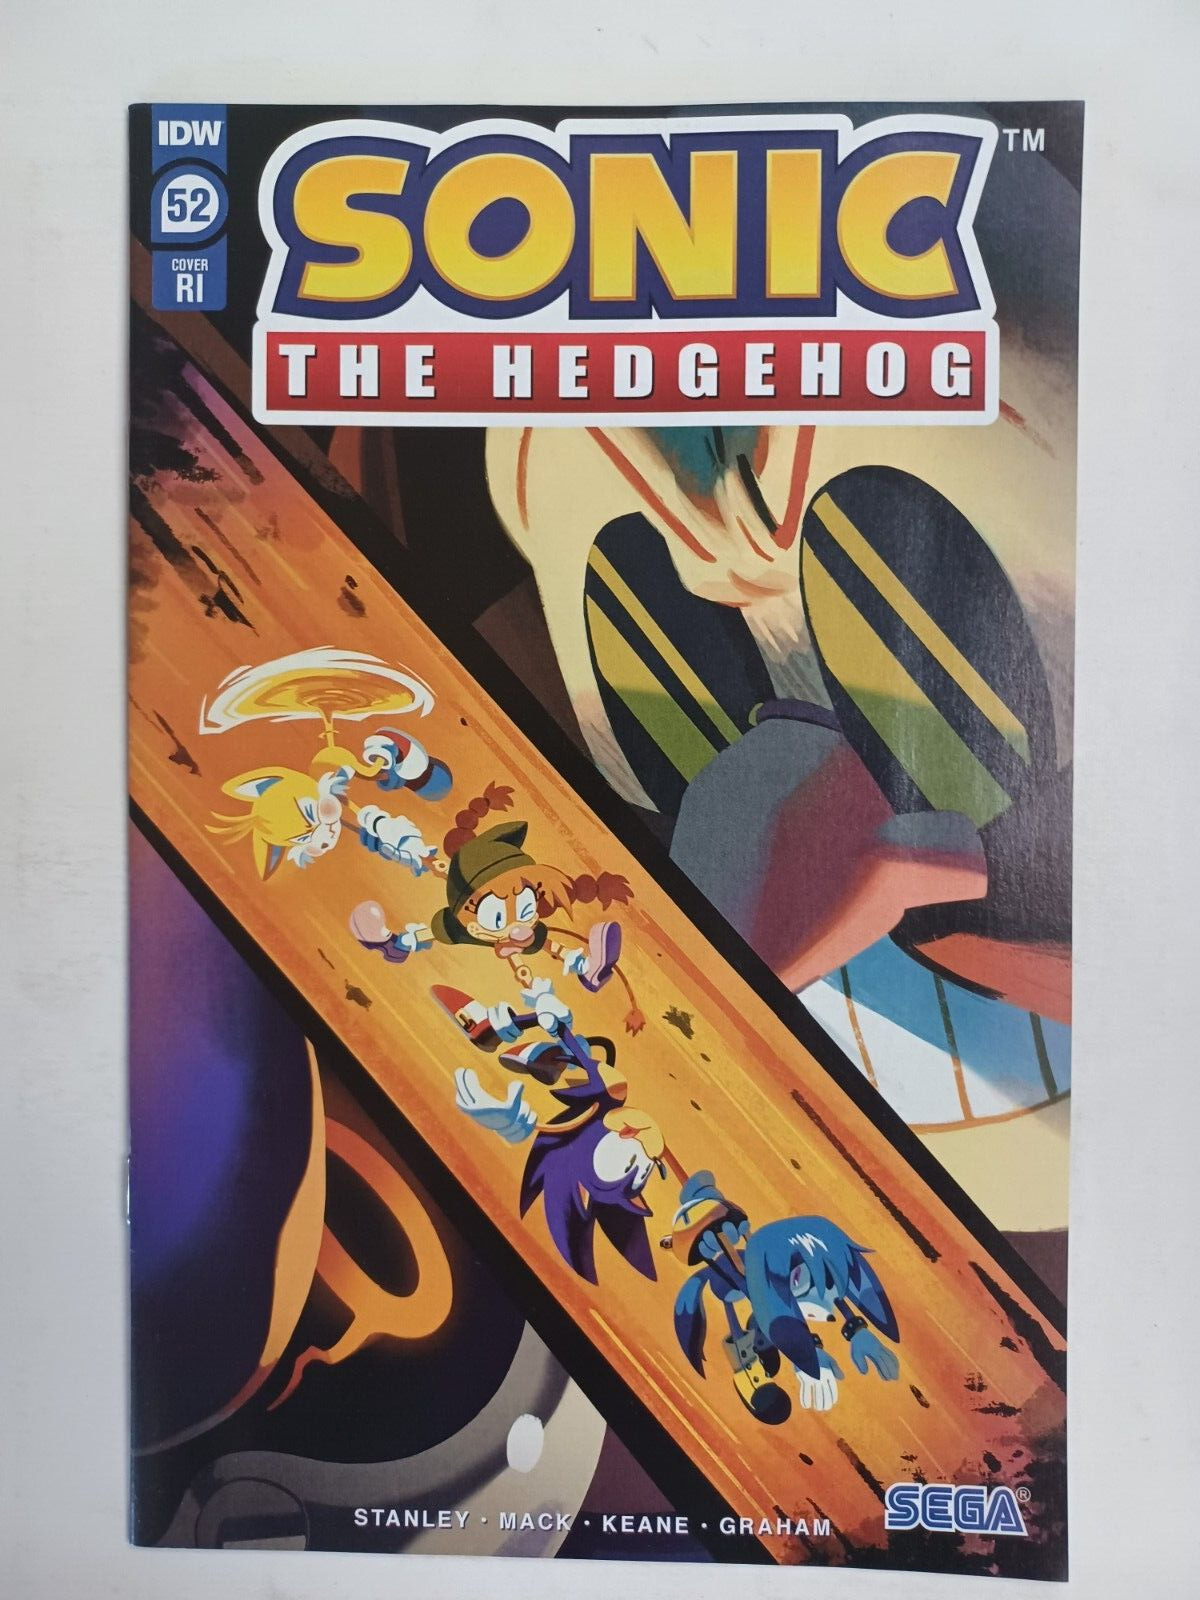 Sonic the Hedgehog #52 - 1:10 RI Variant - IDW - 2022 - NM